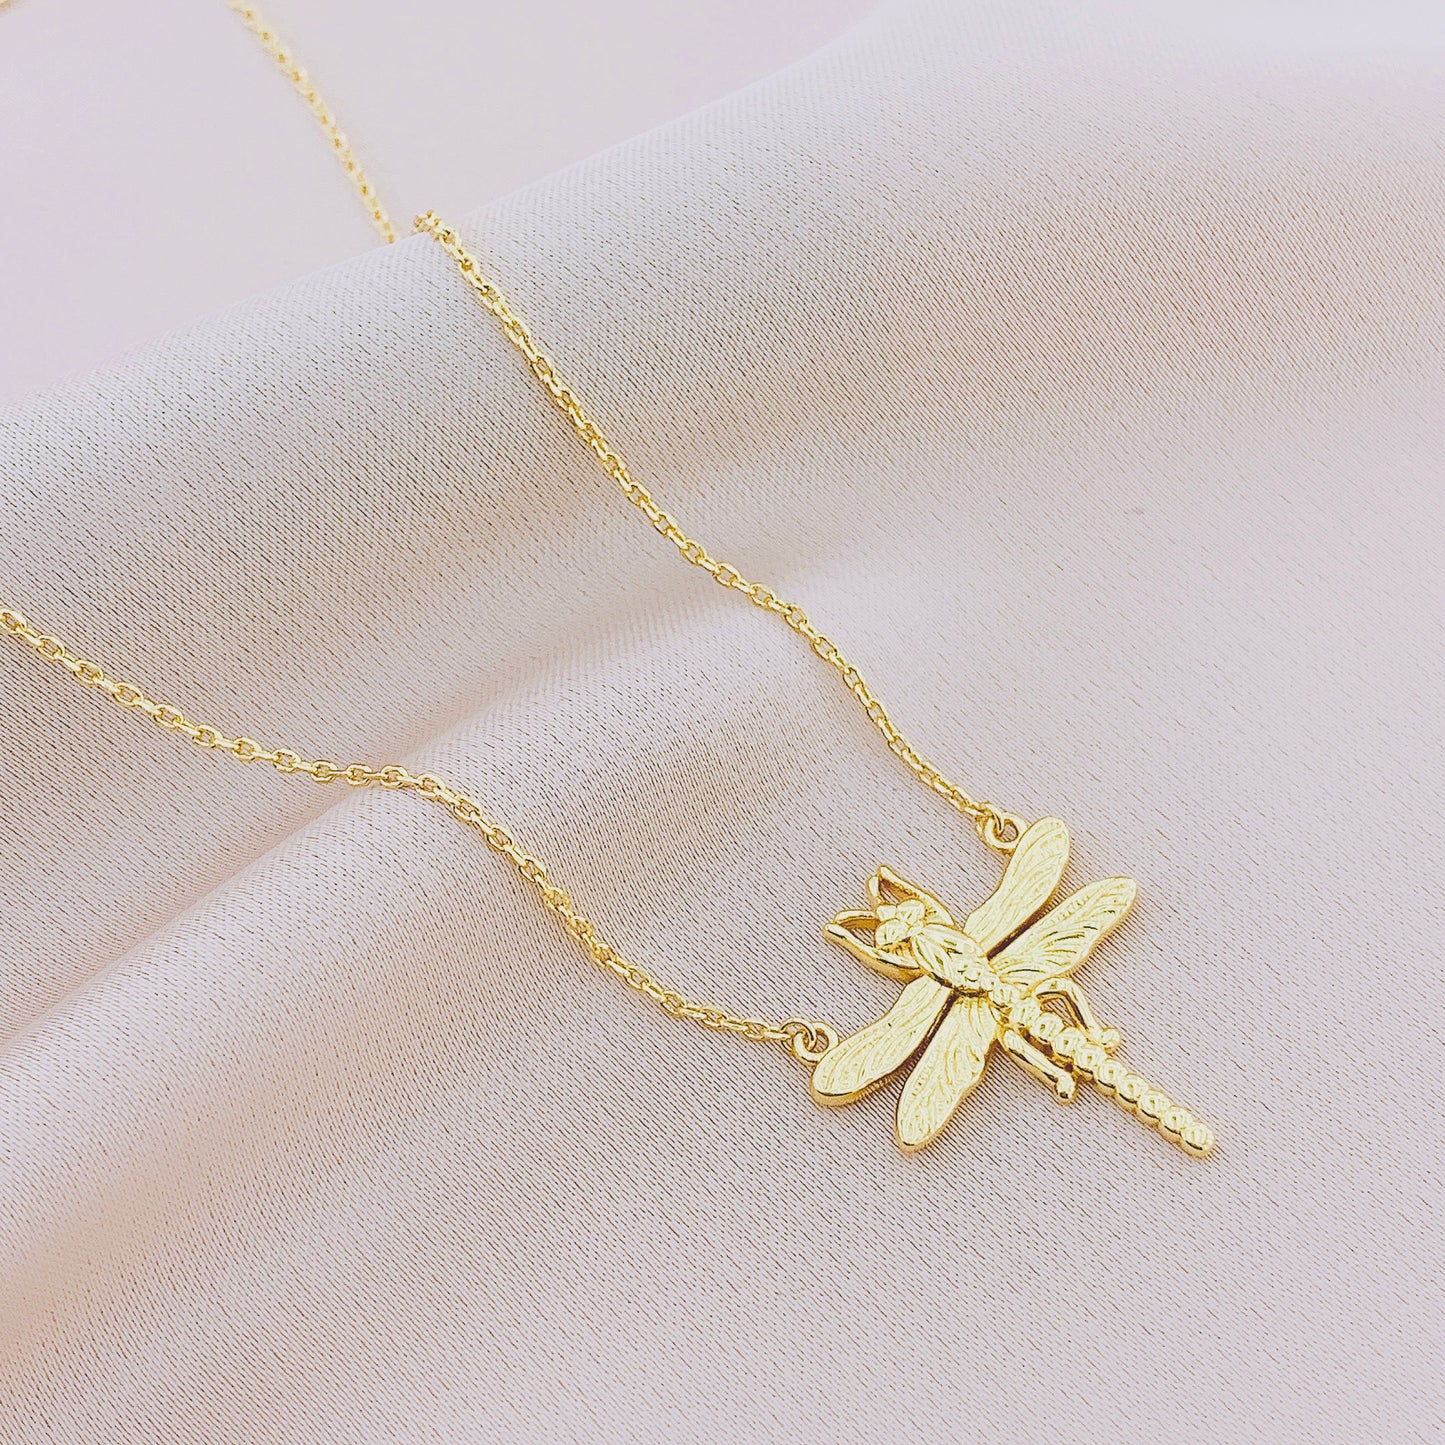 Women's Fashion Animal Dragonfly Pendant Necklace